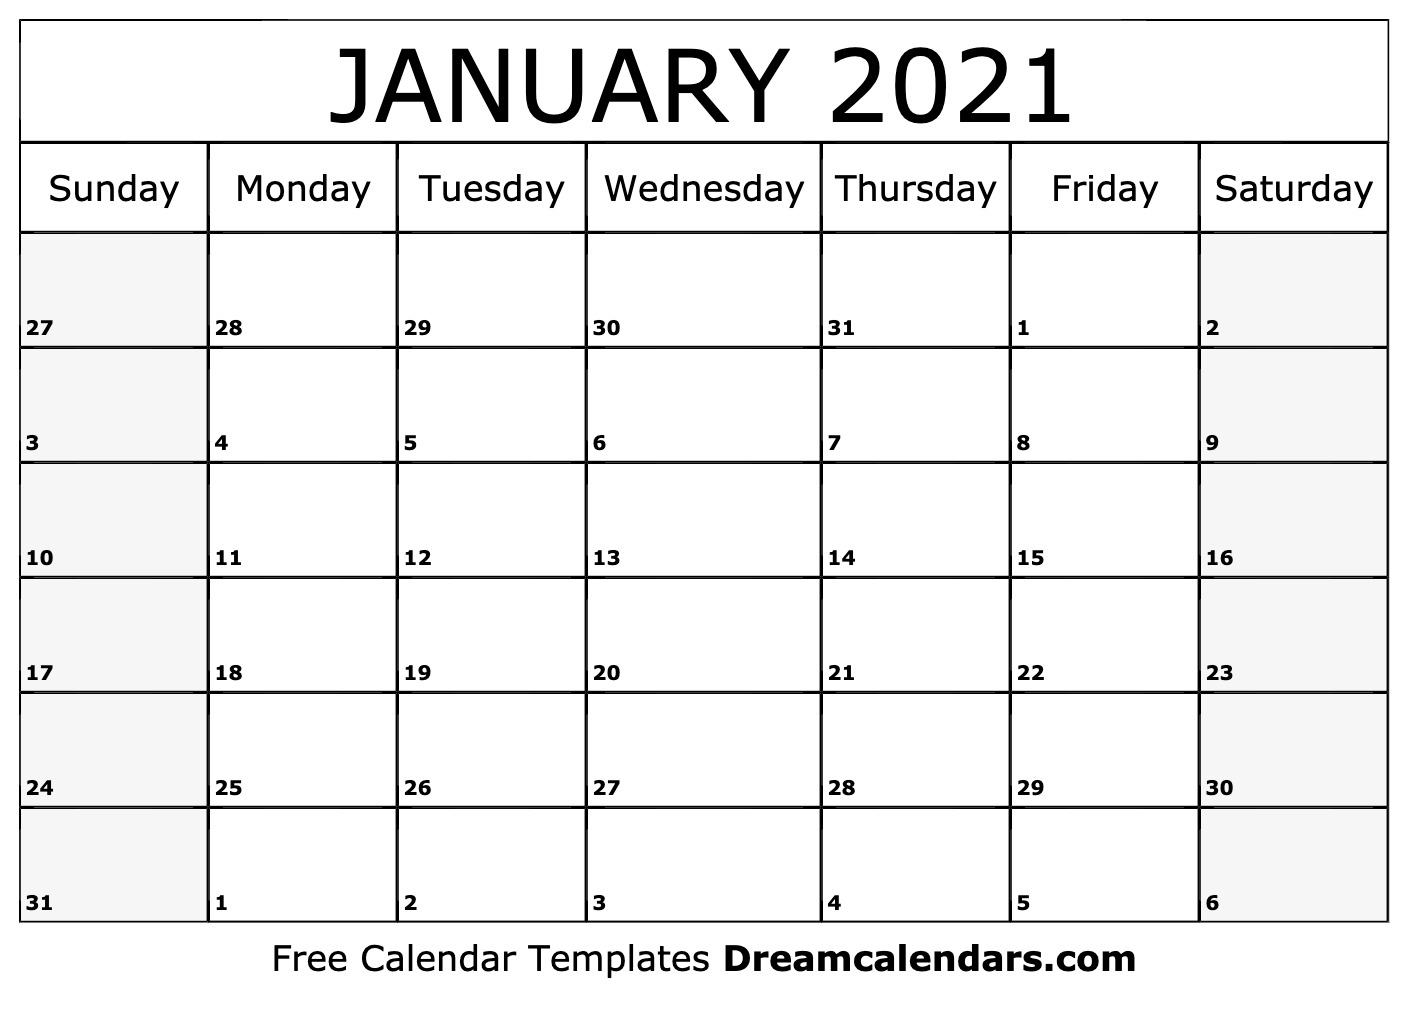 January 2021 Calendar Free Blank Printable Templates